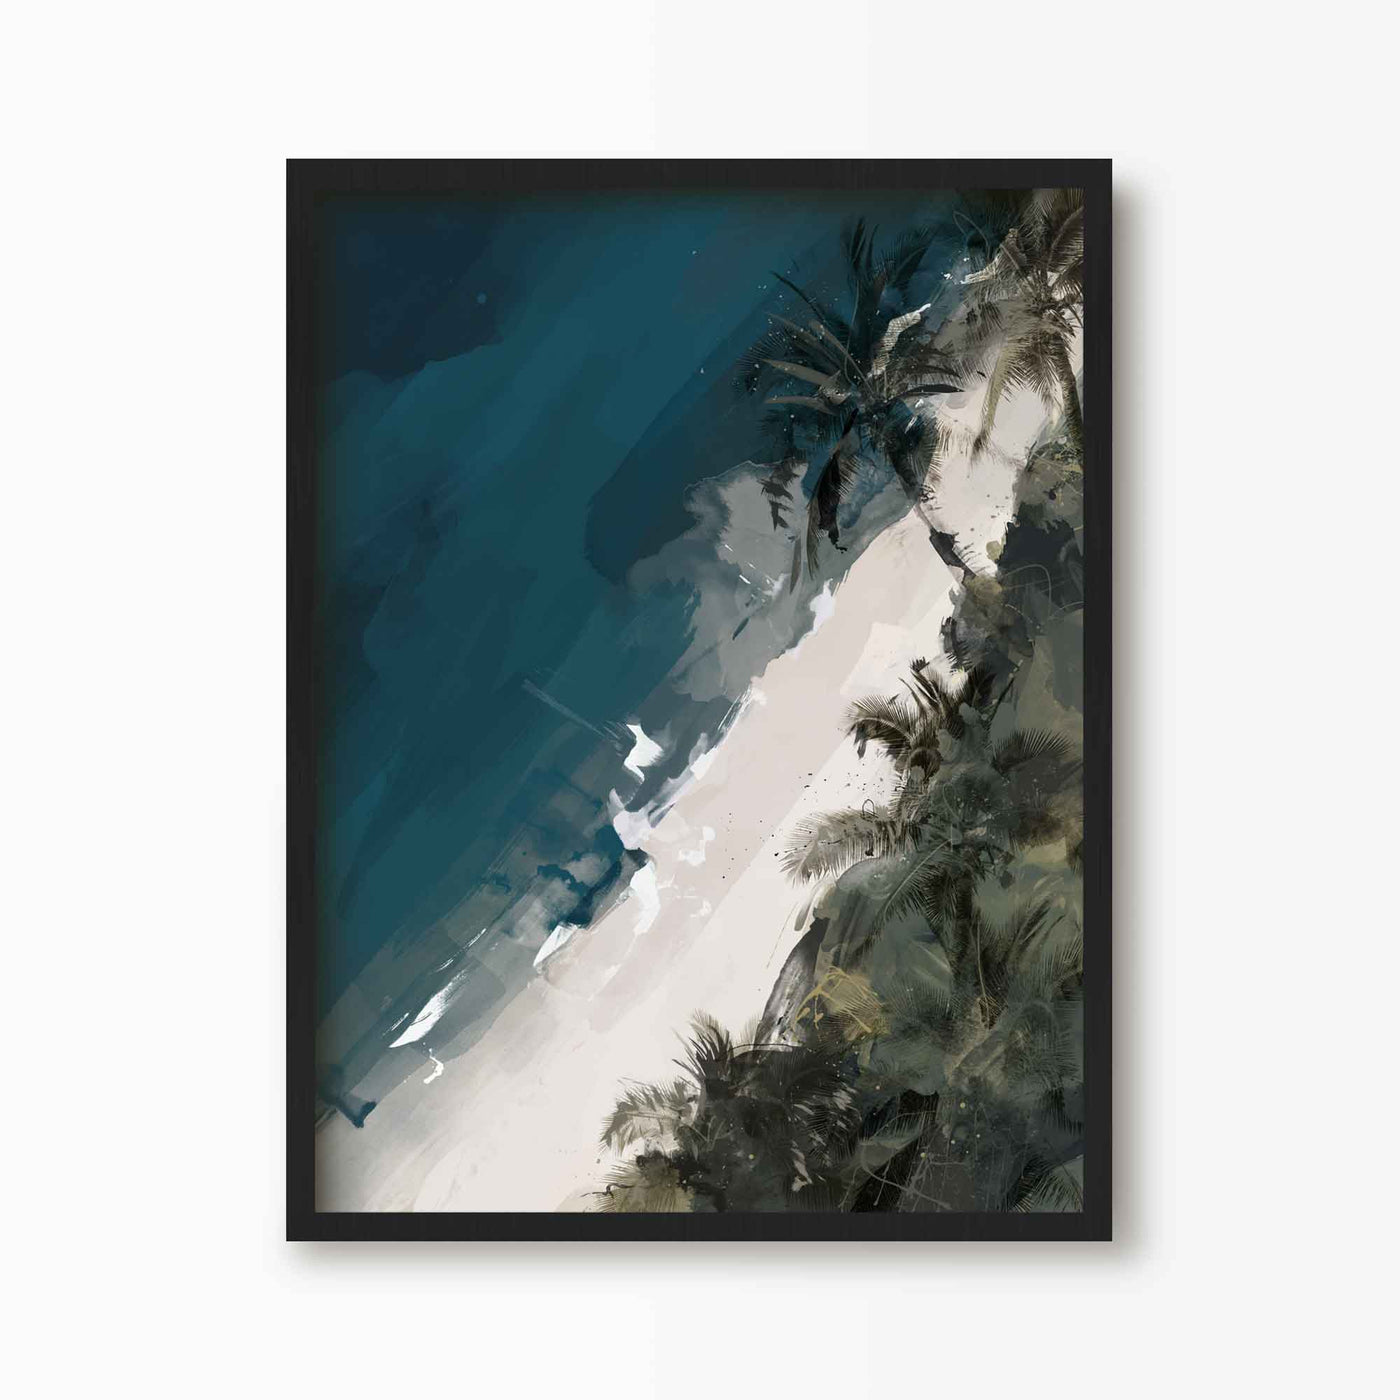 Green Lili 30x40cm (12x16") / Black Frame Beach Days Art Print